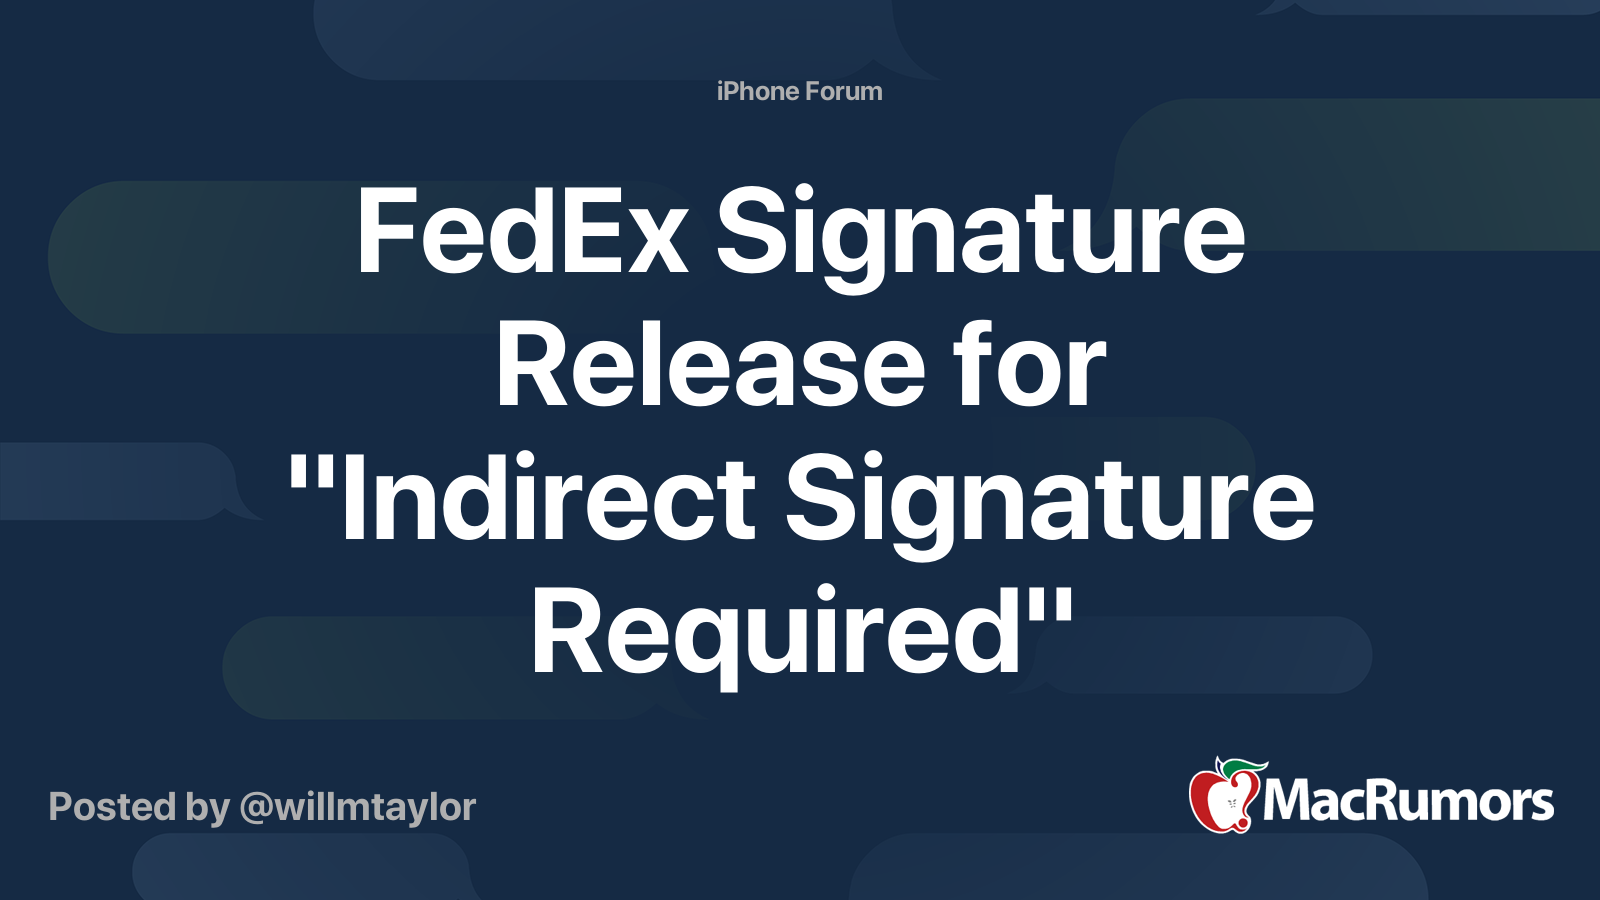 fedex-signature-release-for-indirect-signature-required-macrumors-forums